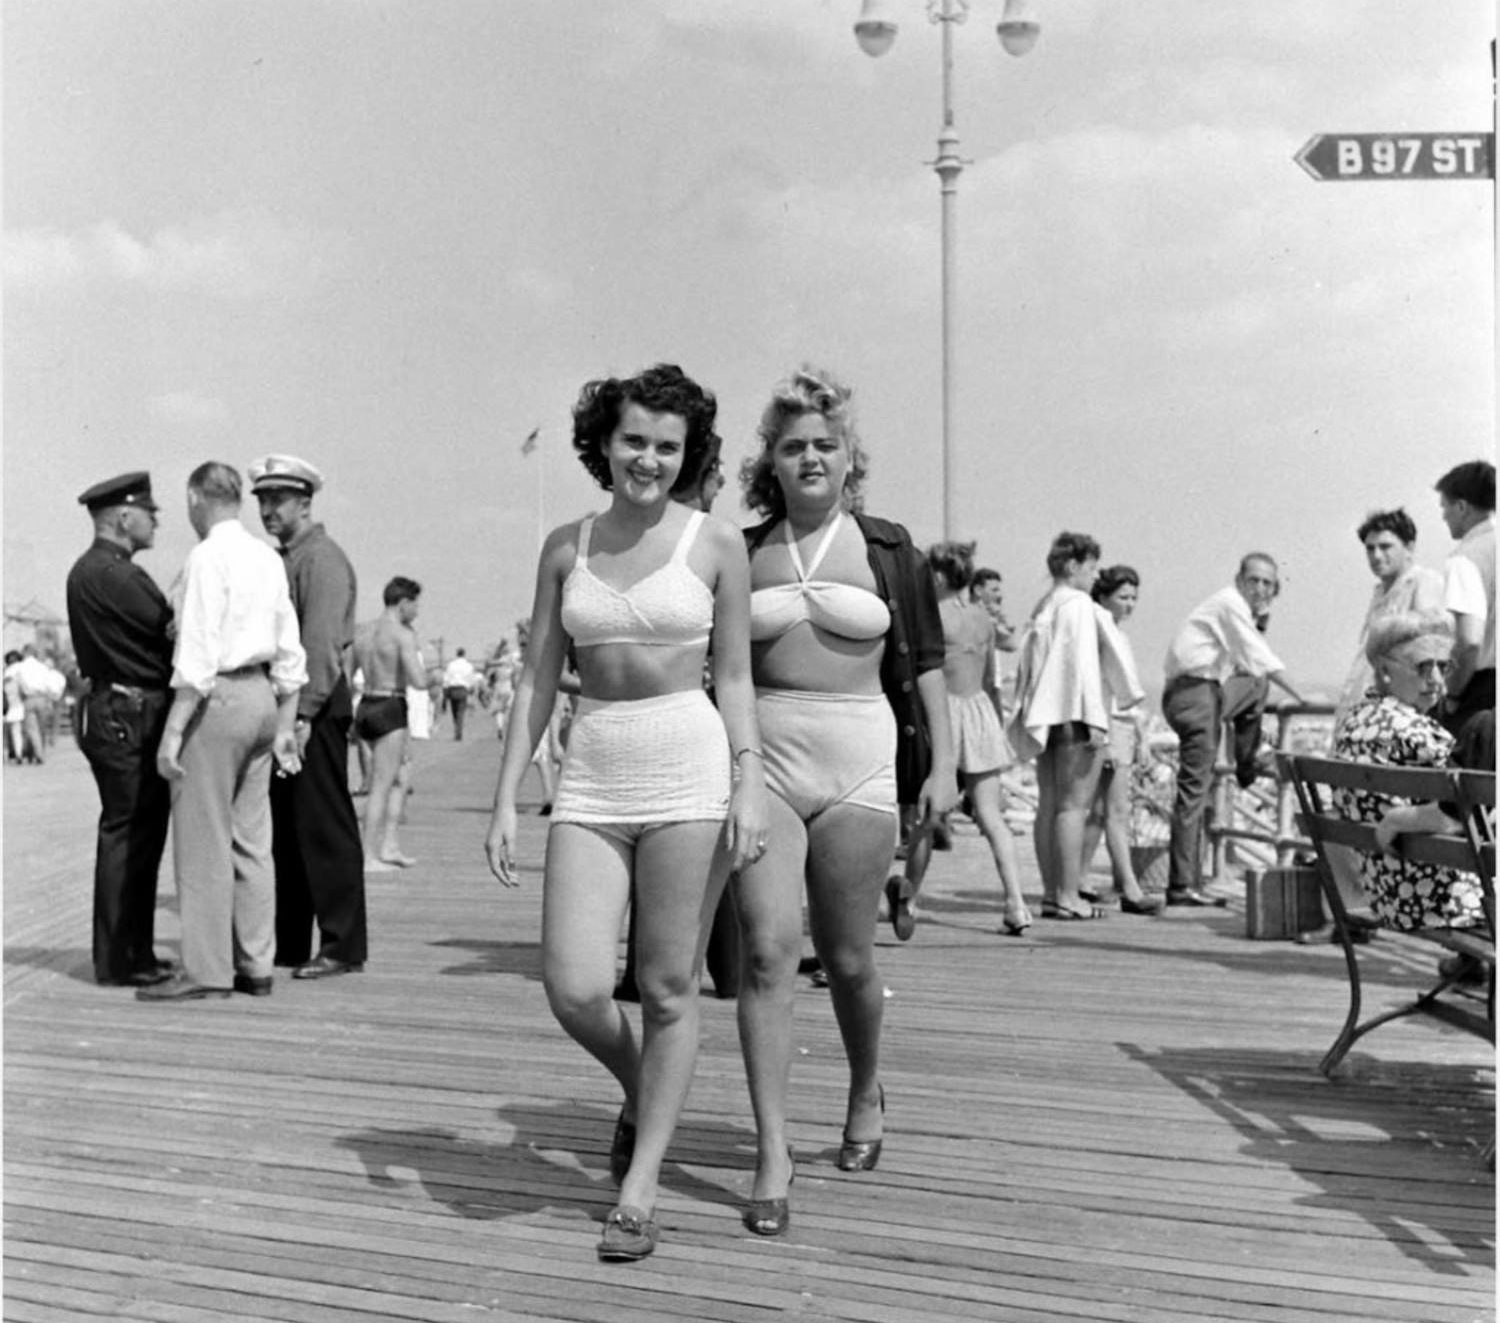 Rockaway Beach by Sam Shere, Sam Shere photography, indecent exposure tickets, Rockaway history